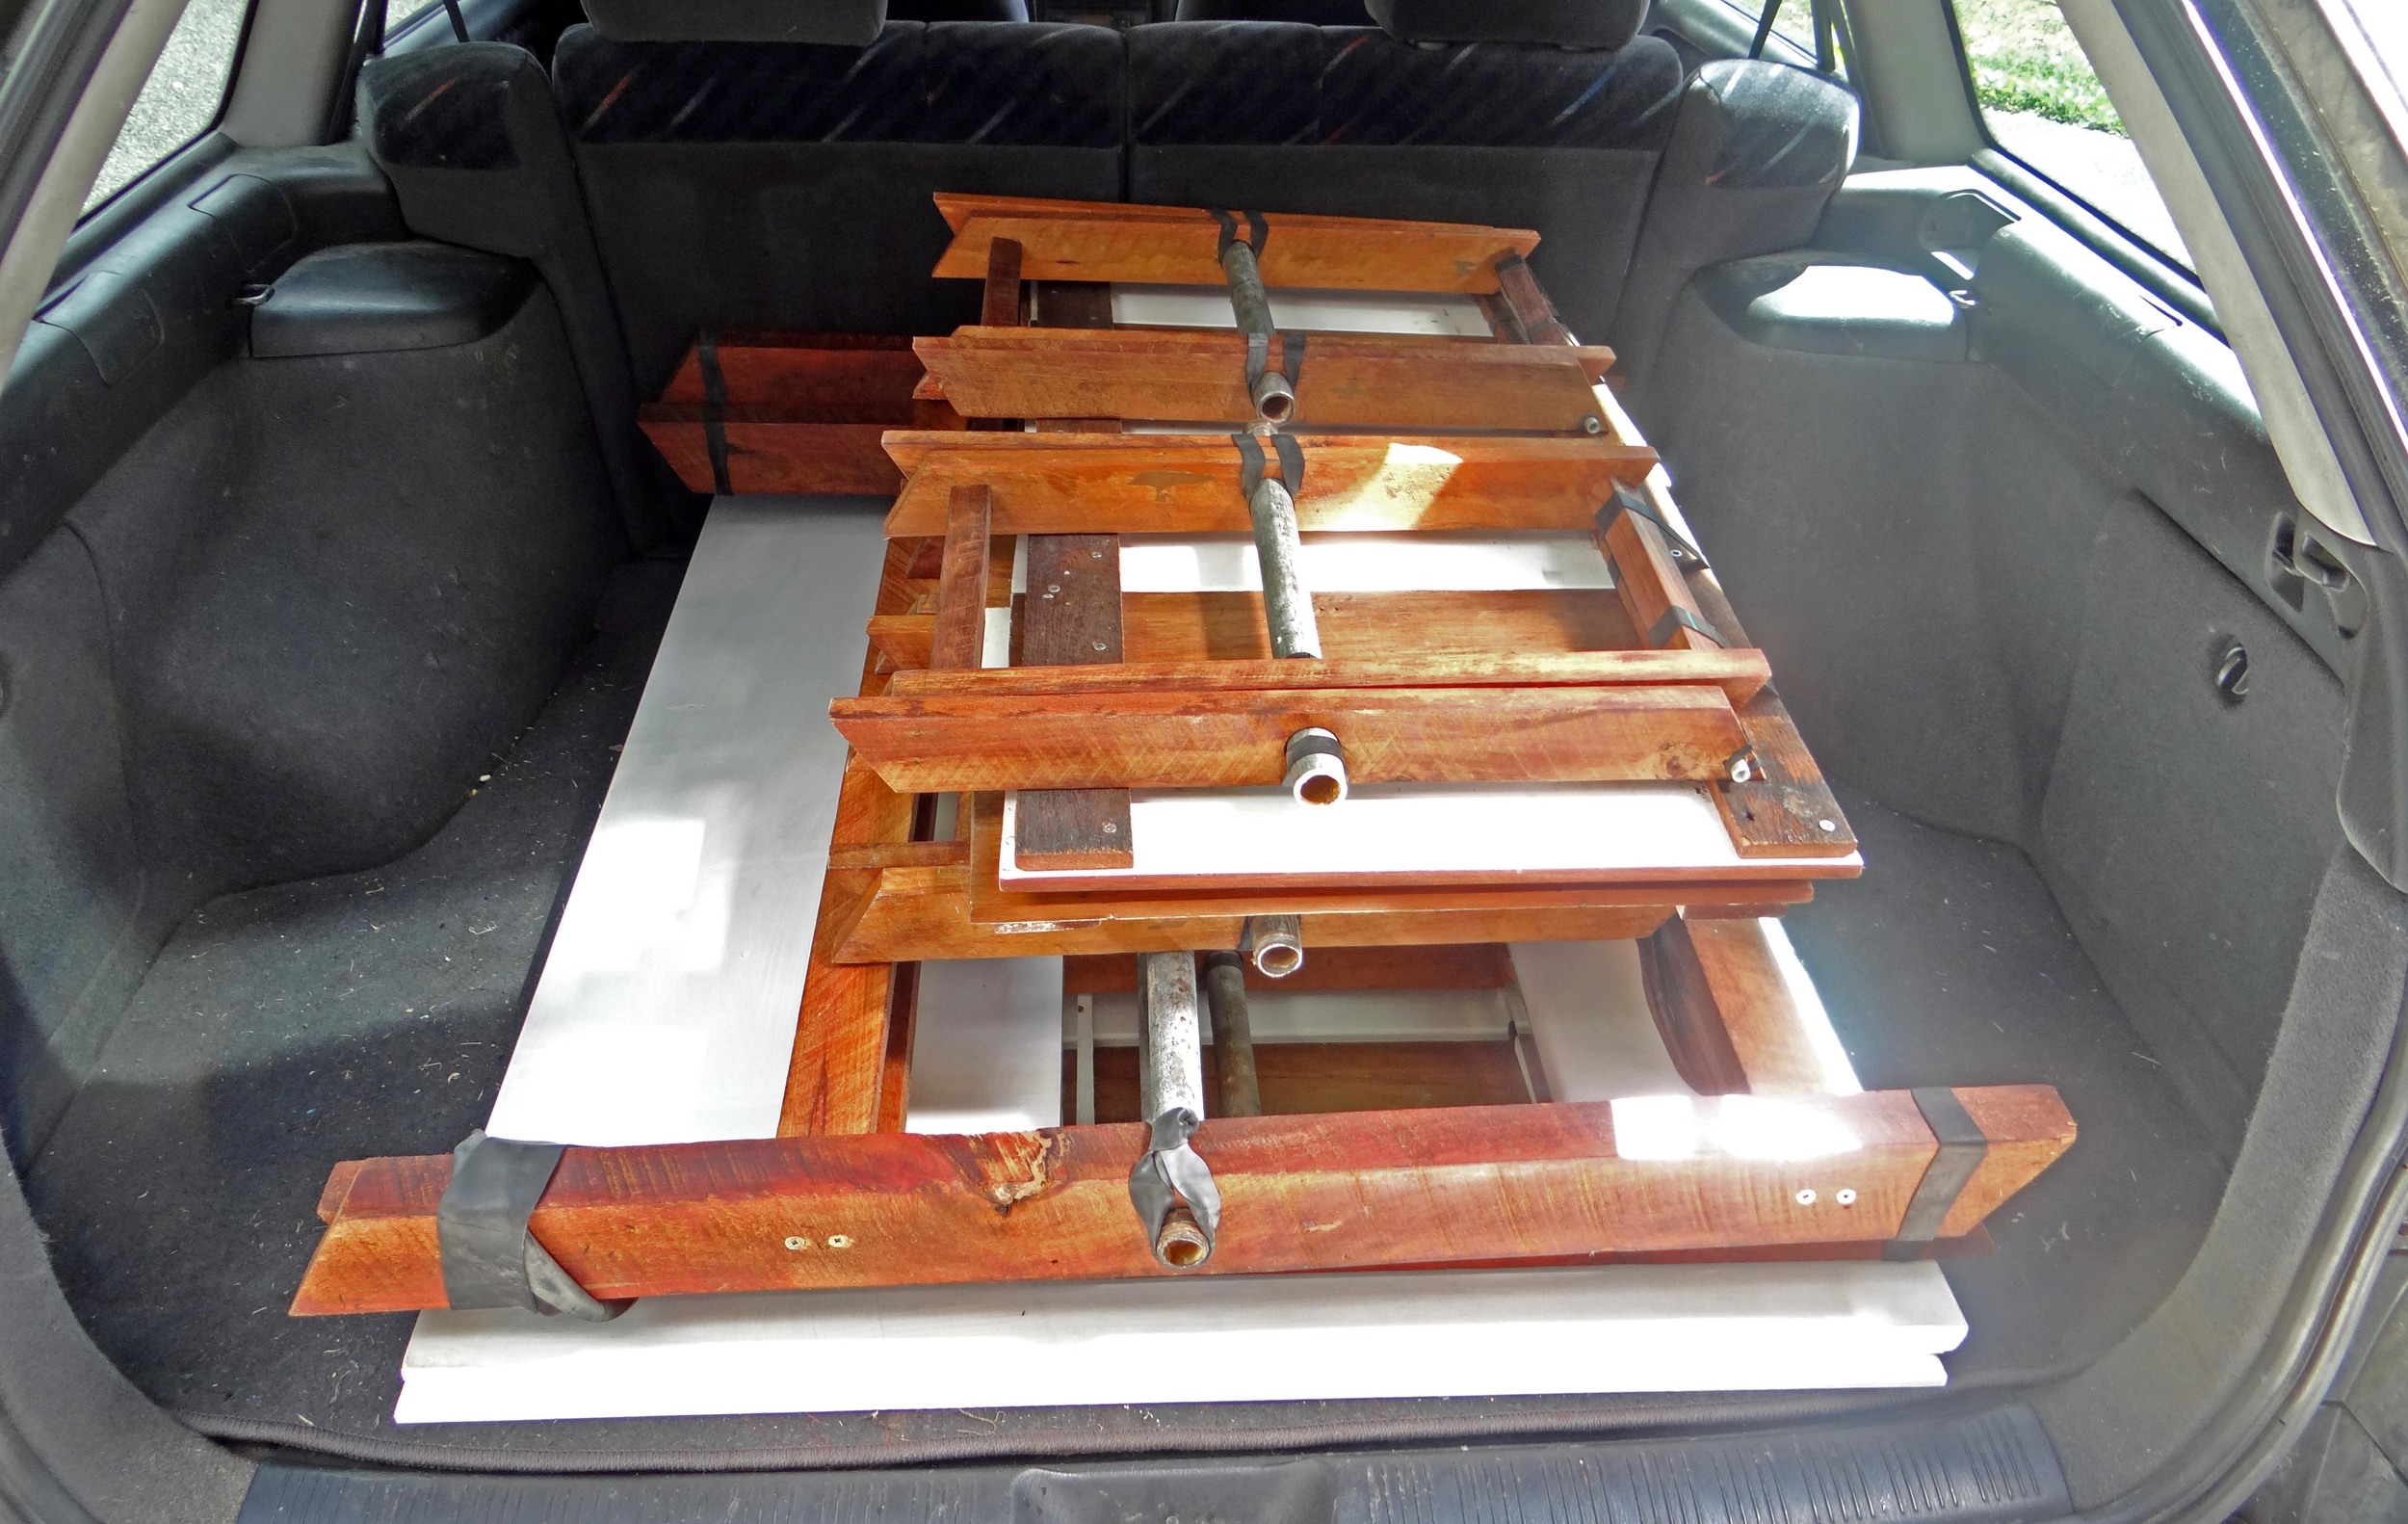 3.table&stools in car.jpg